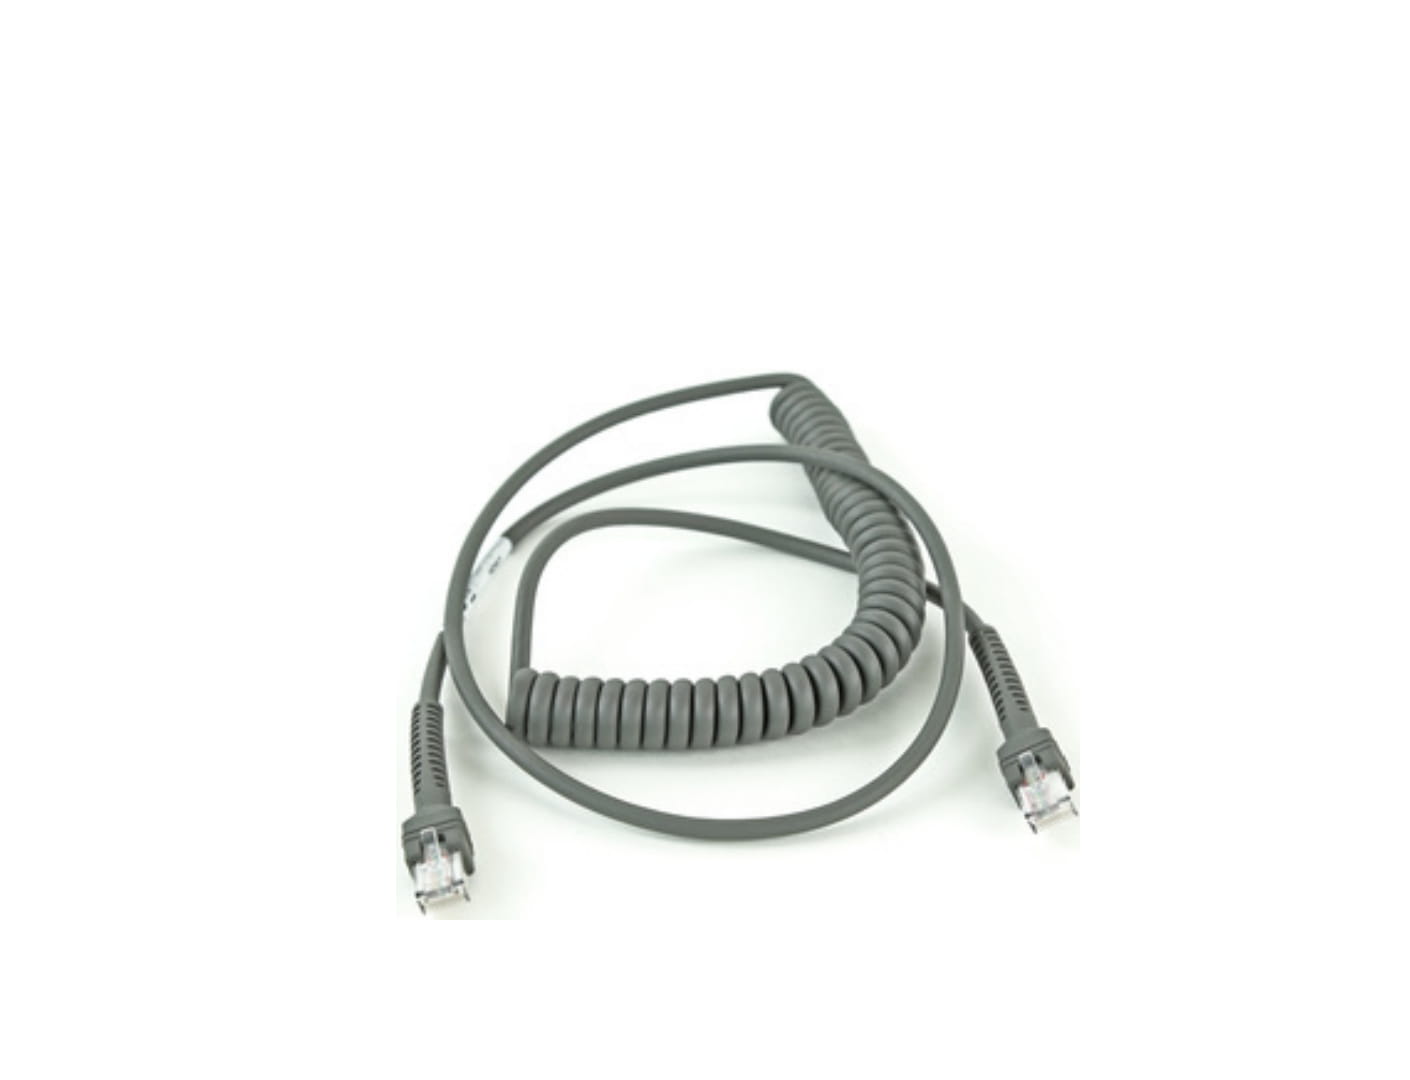 Zebra RS232 Cable - Kabel seriell - 1.83 m - gewickelt